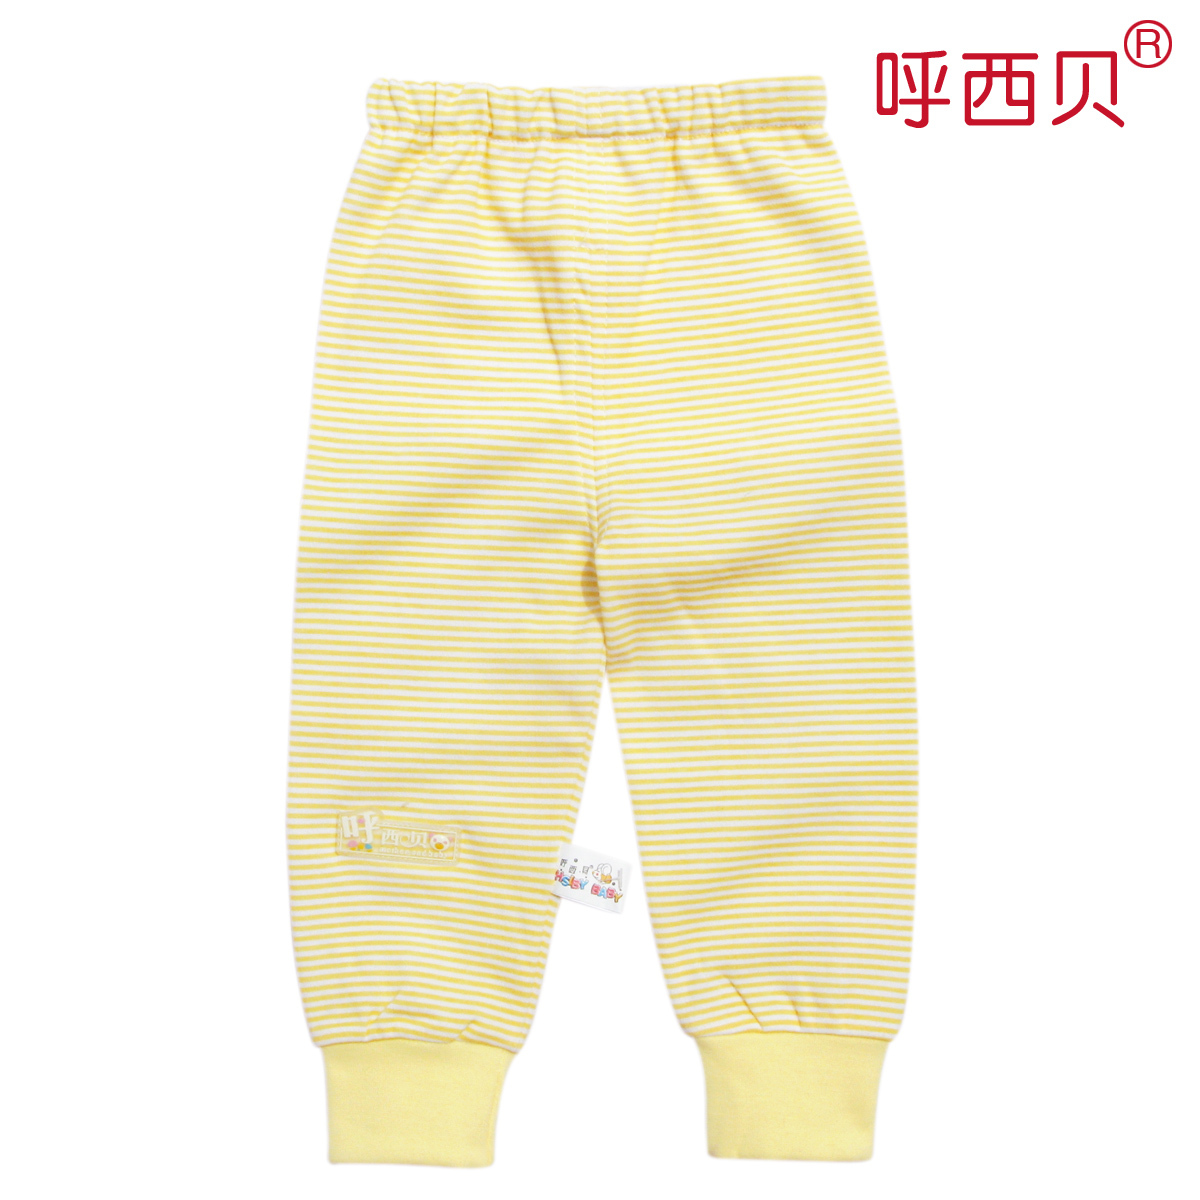 Child underwear 100% cotton baby pants baby pajama pants long johns children stripe pants 104